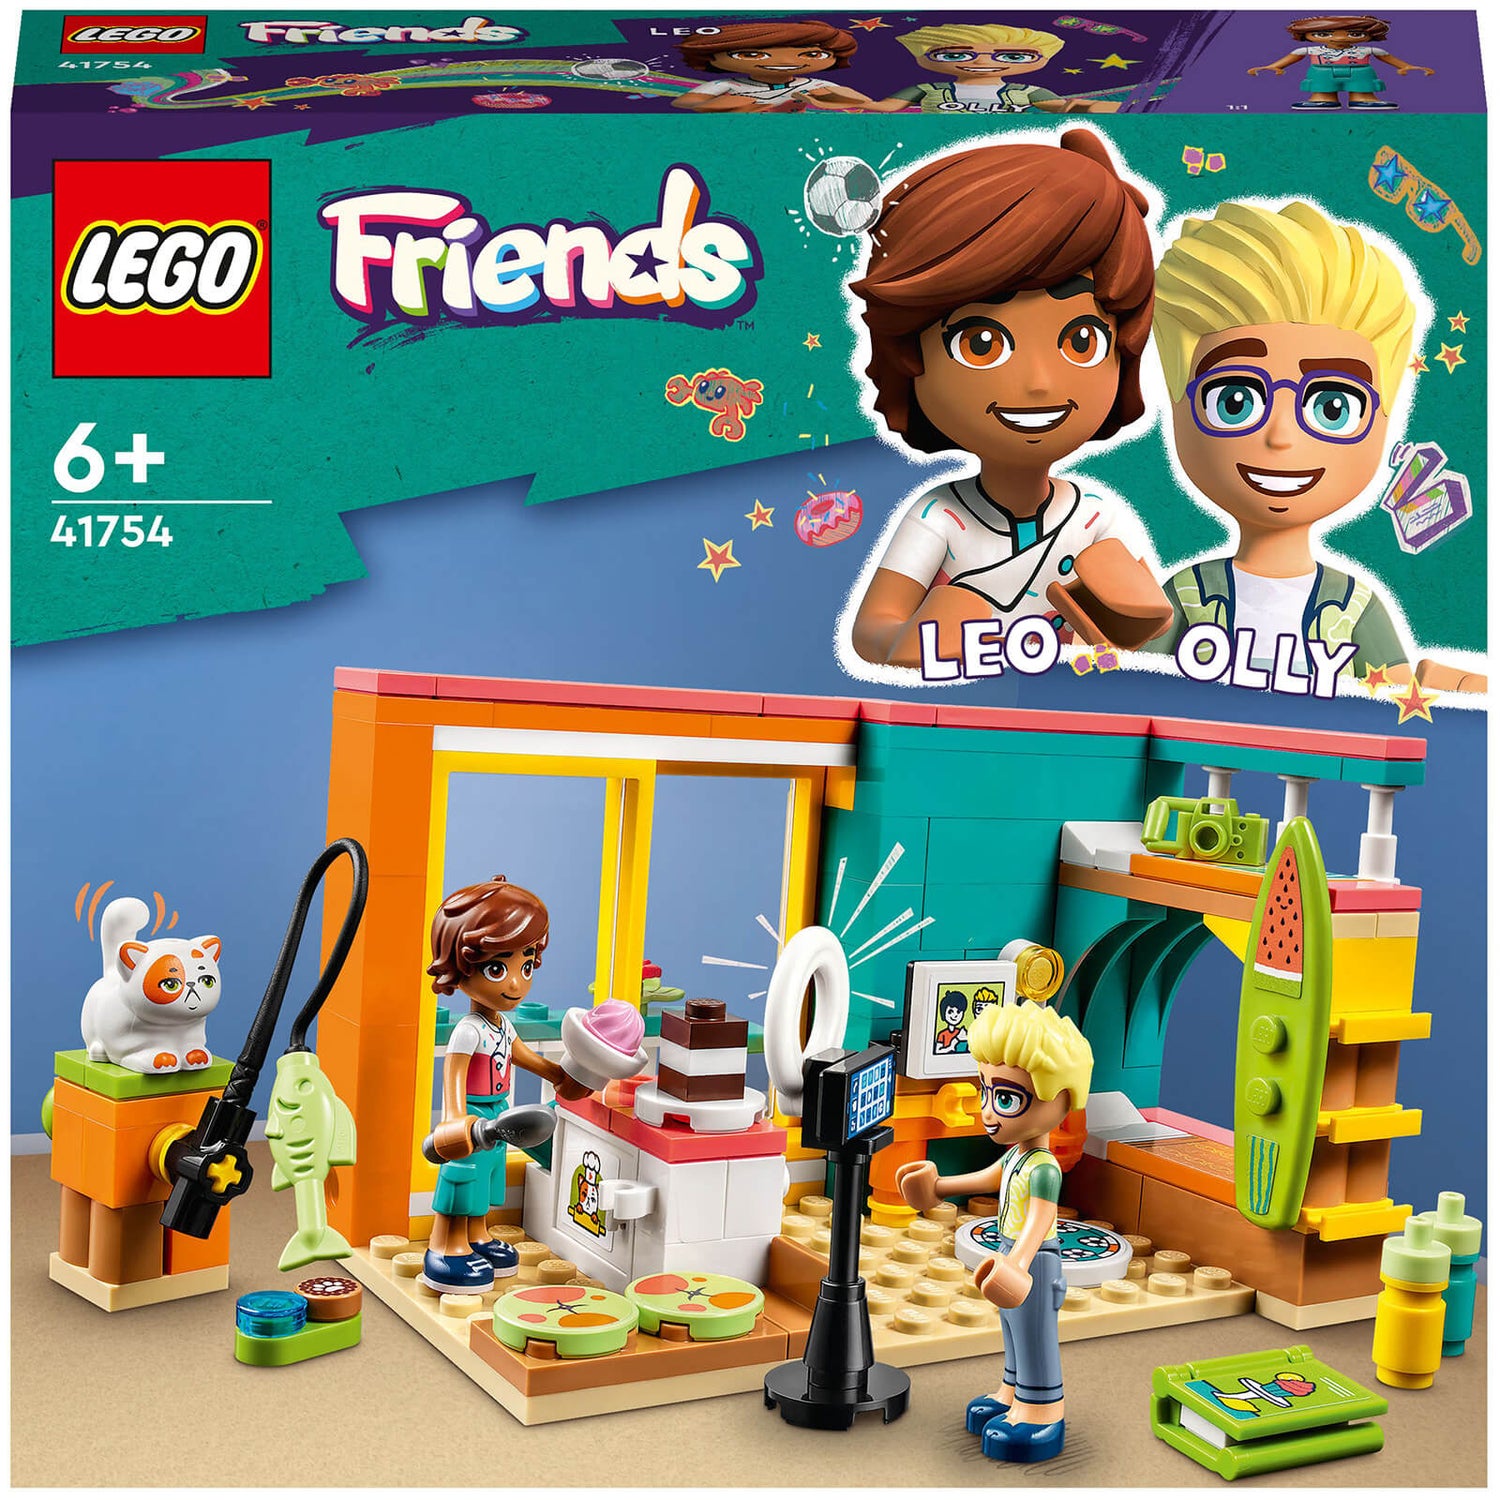 LEGO Friends: Bedroom 3 Building Set (41754)